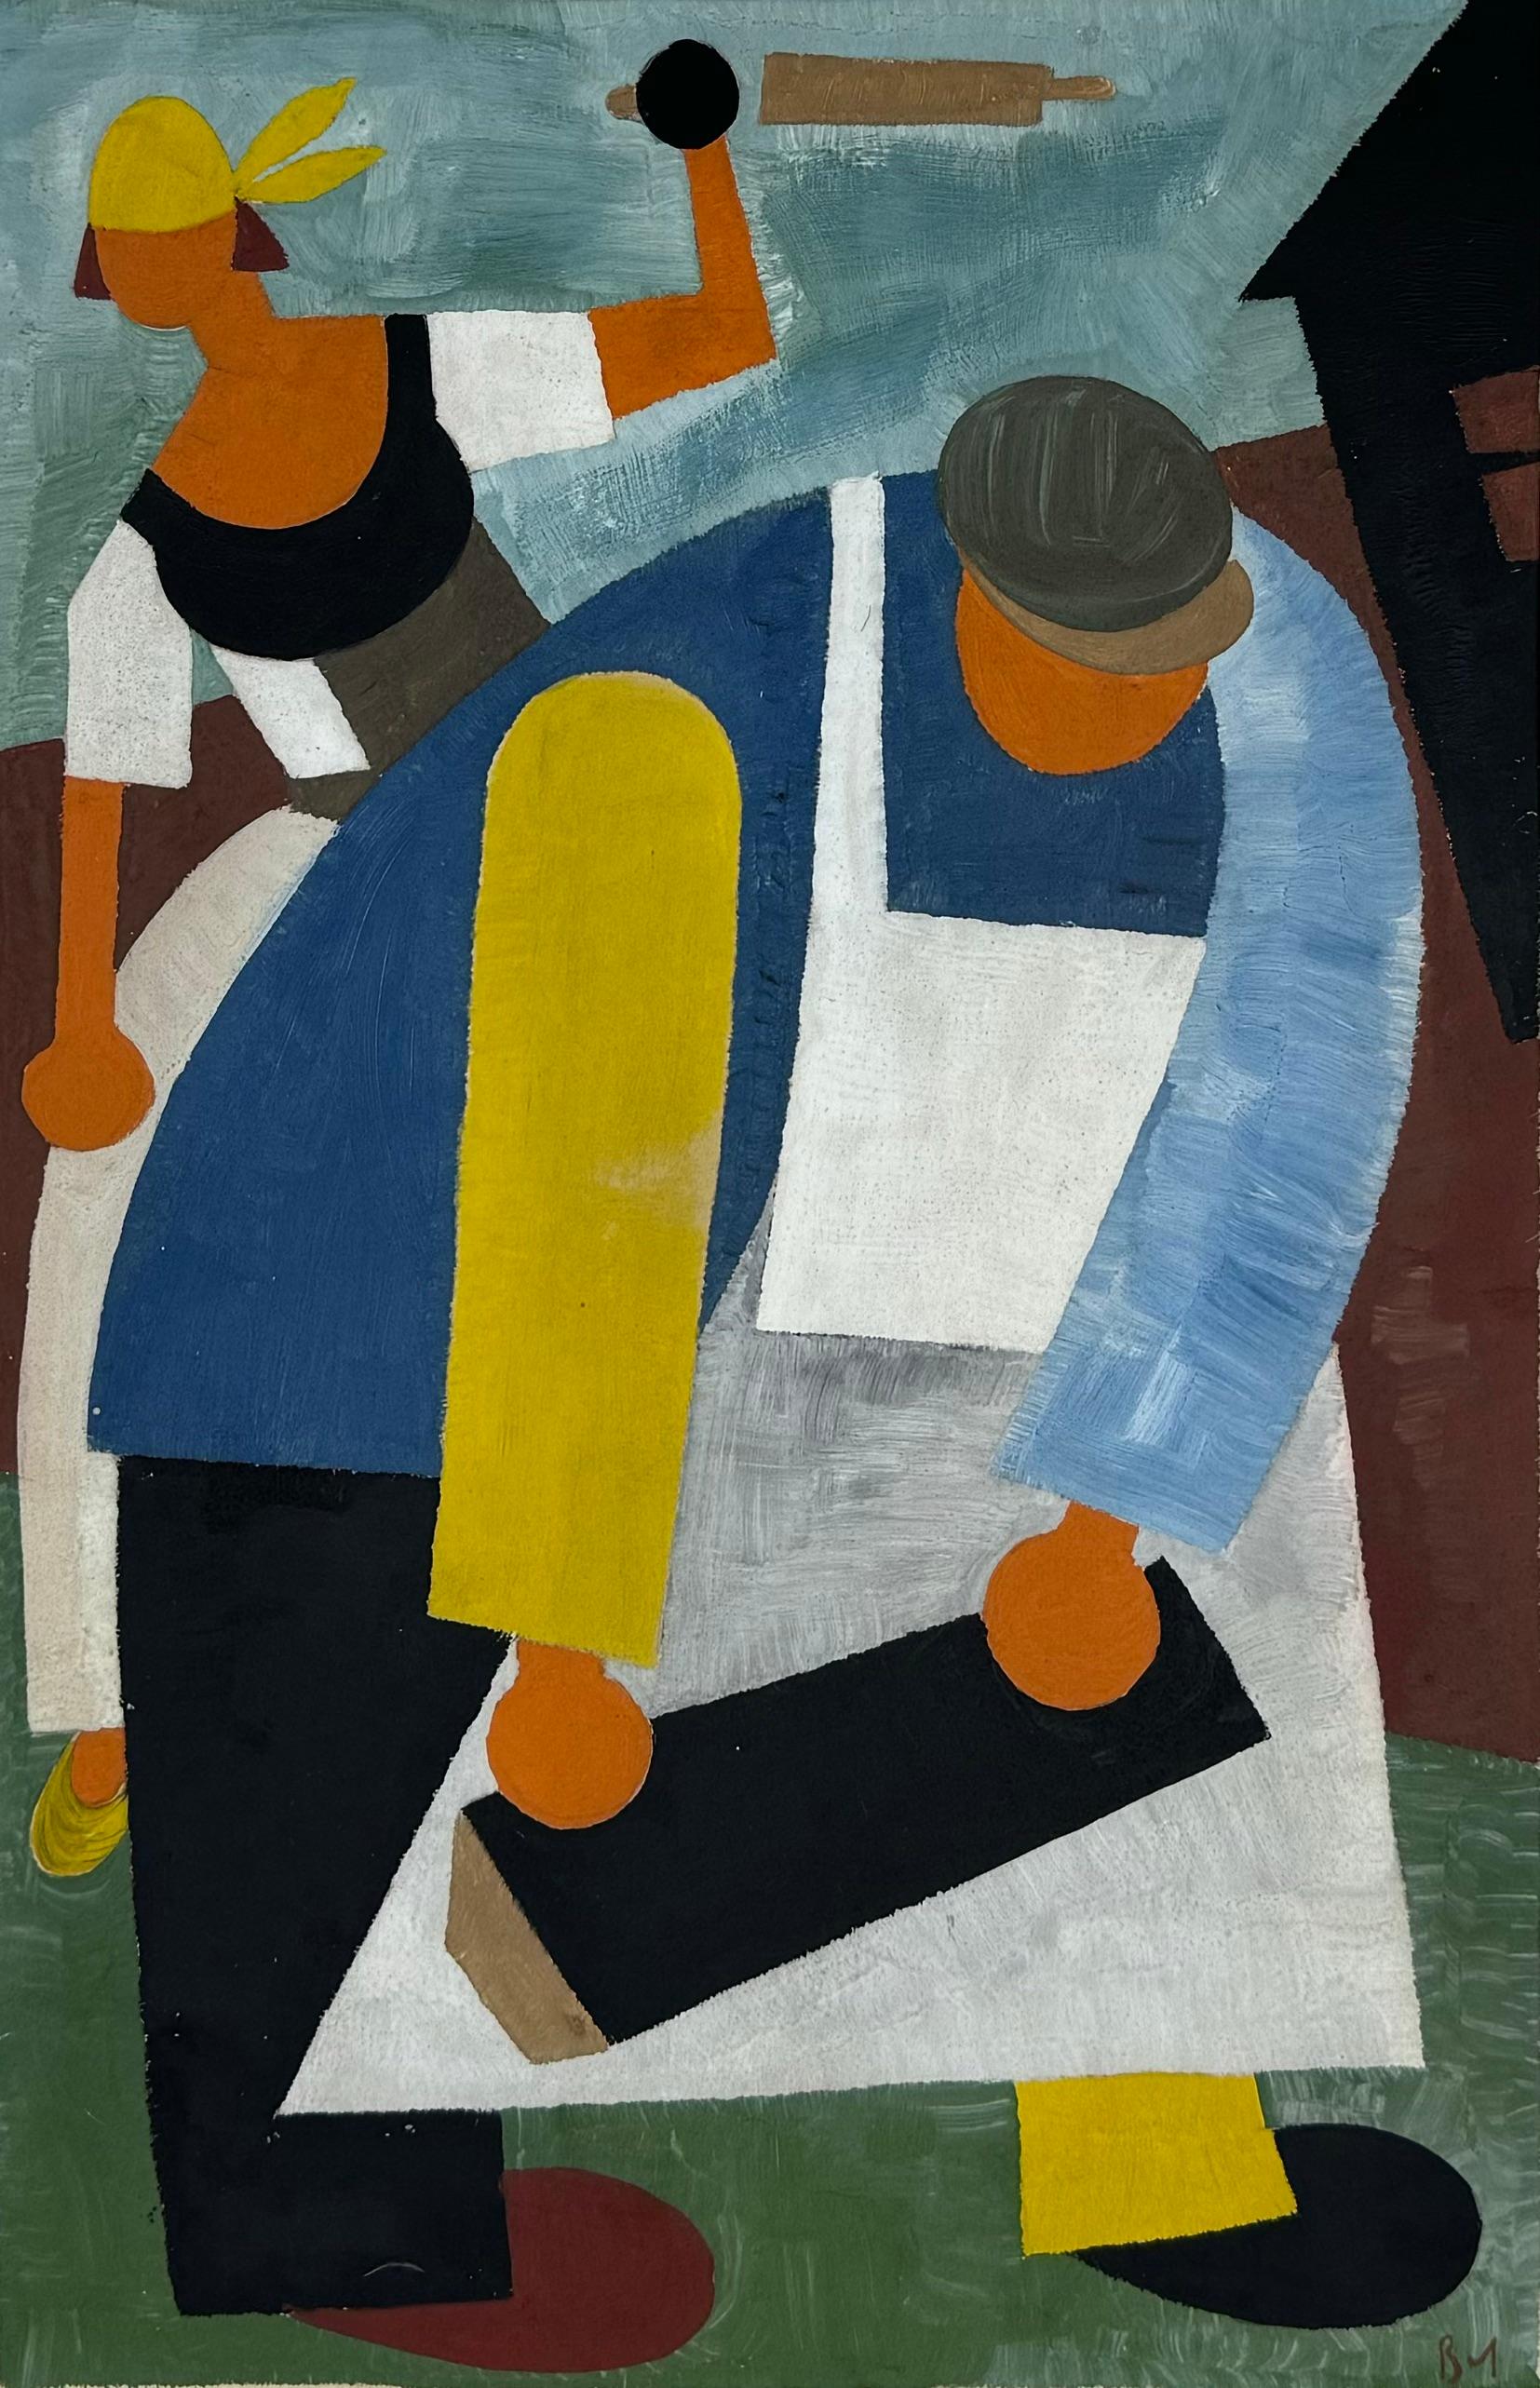 "Workers" Russian Constructivist 1920s Modern Social Realism Cubism Figurative